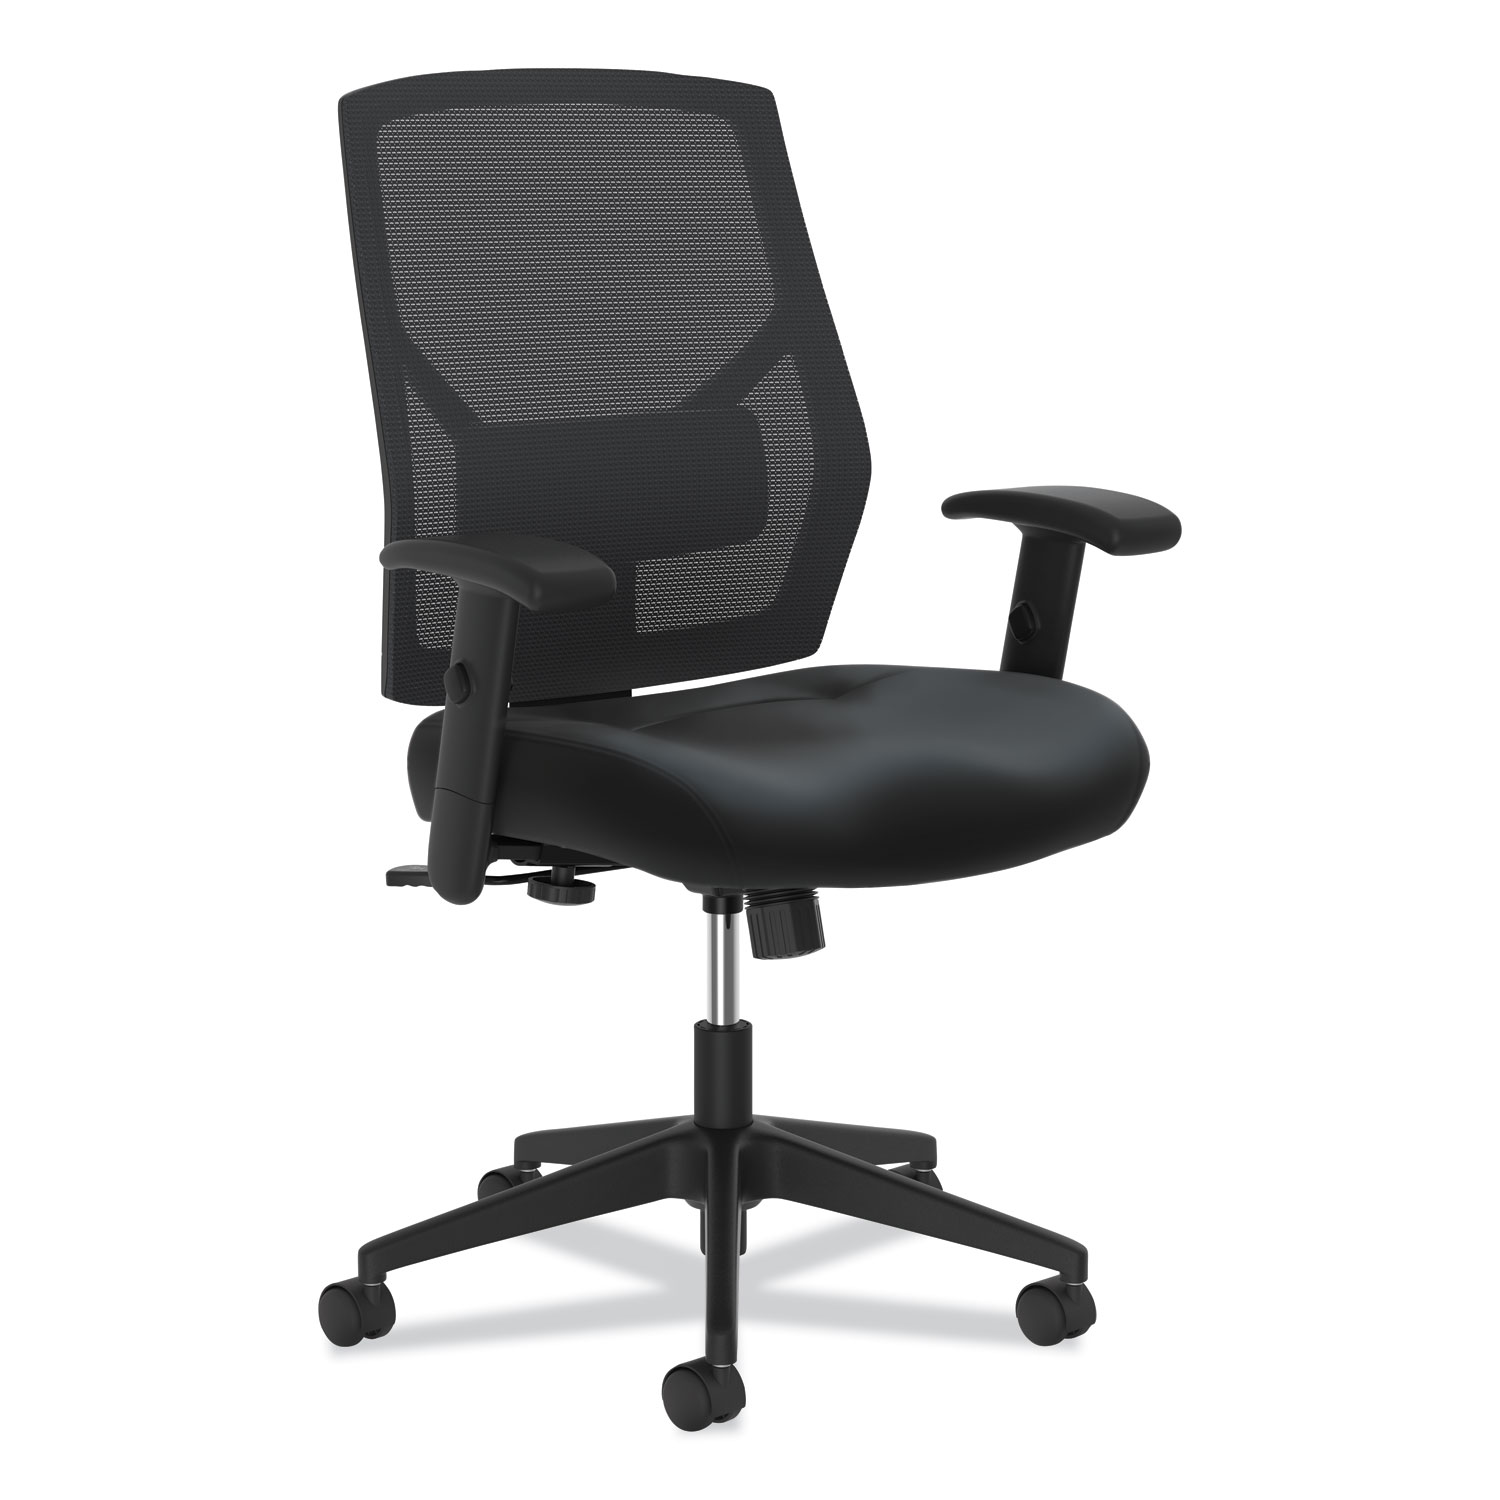  HON BSXVL581SB11T Crio High-Back Task Chair, Supports up to 250 lbs., Black Seat/Black Back, Black Base (BSXVL581SB11T) 